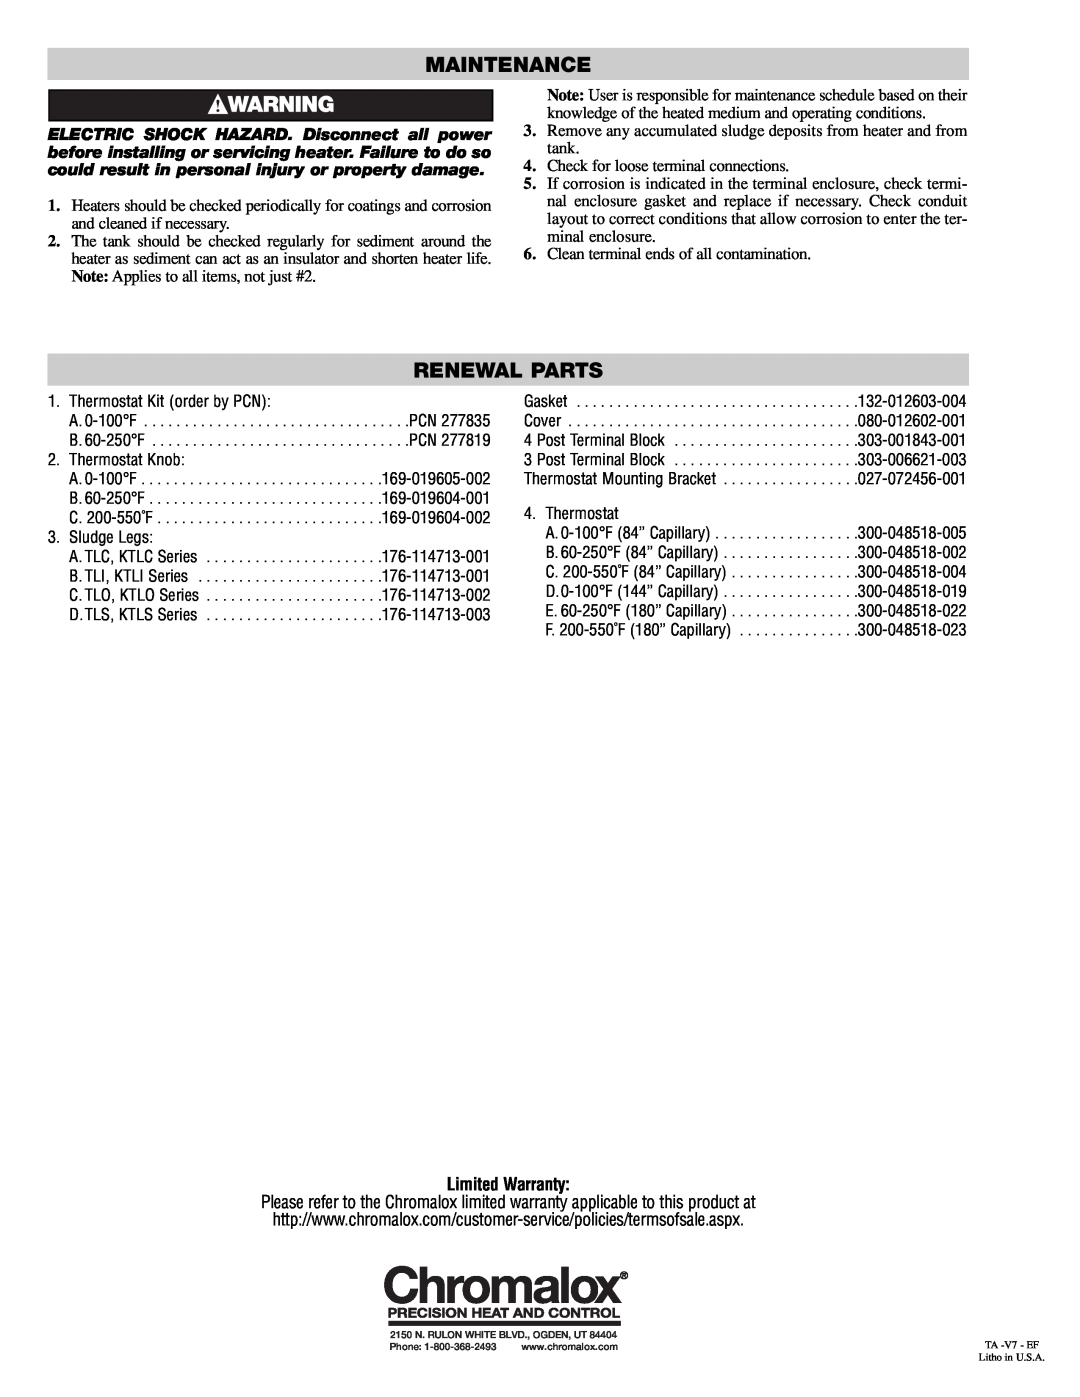 Chromalox PD411-10 installation instructions Maintenance, Renewal Parts, Limited Warranty 